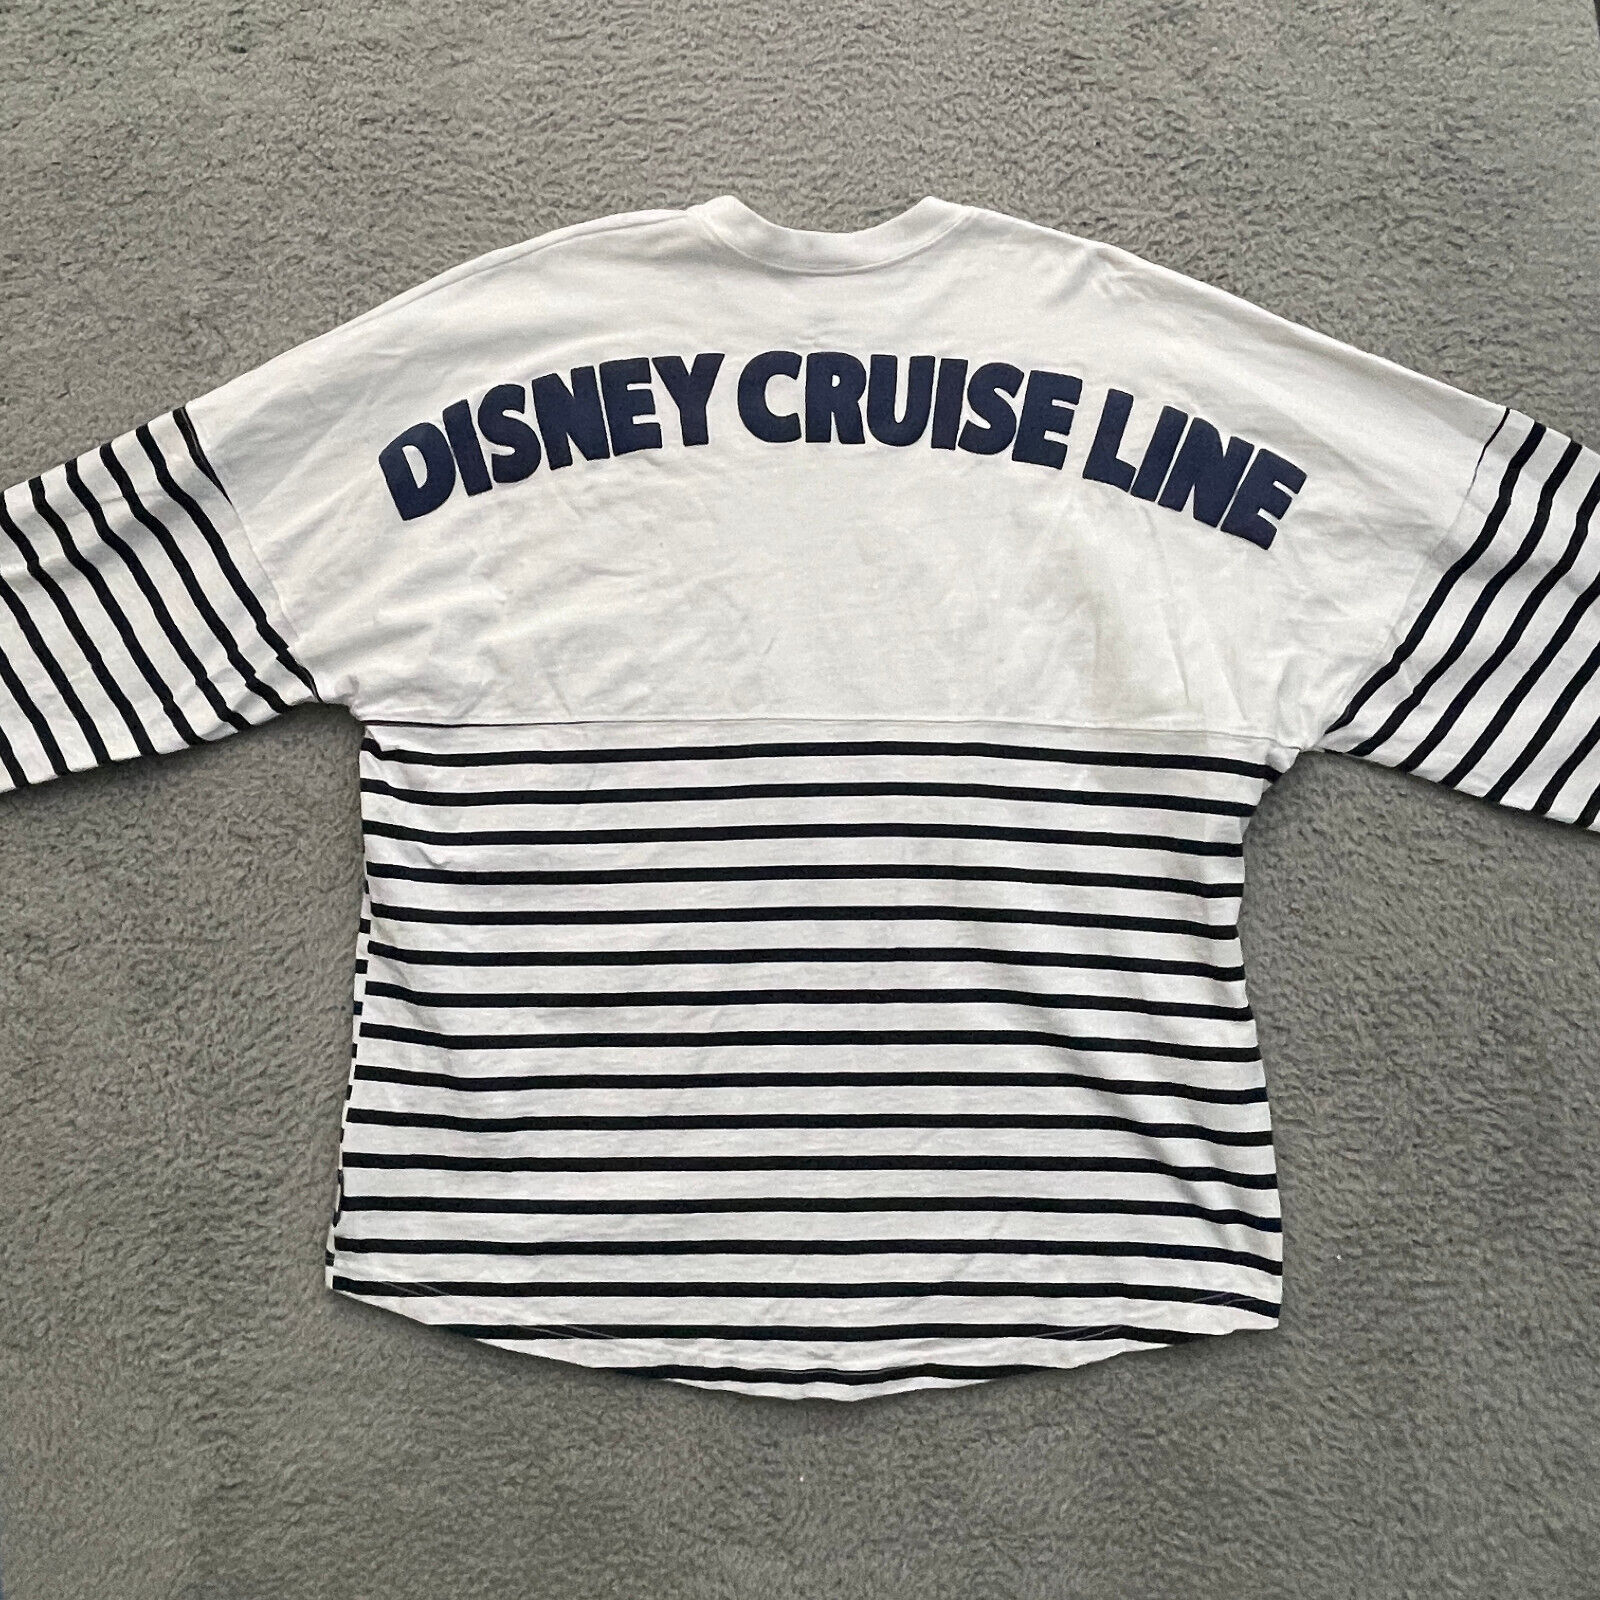 Disney Cruise Line Spirit Jersey Shirt Adult Large White Blue Long Sleeve